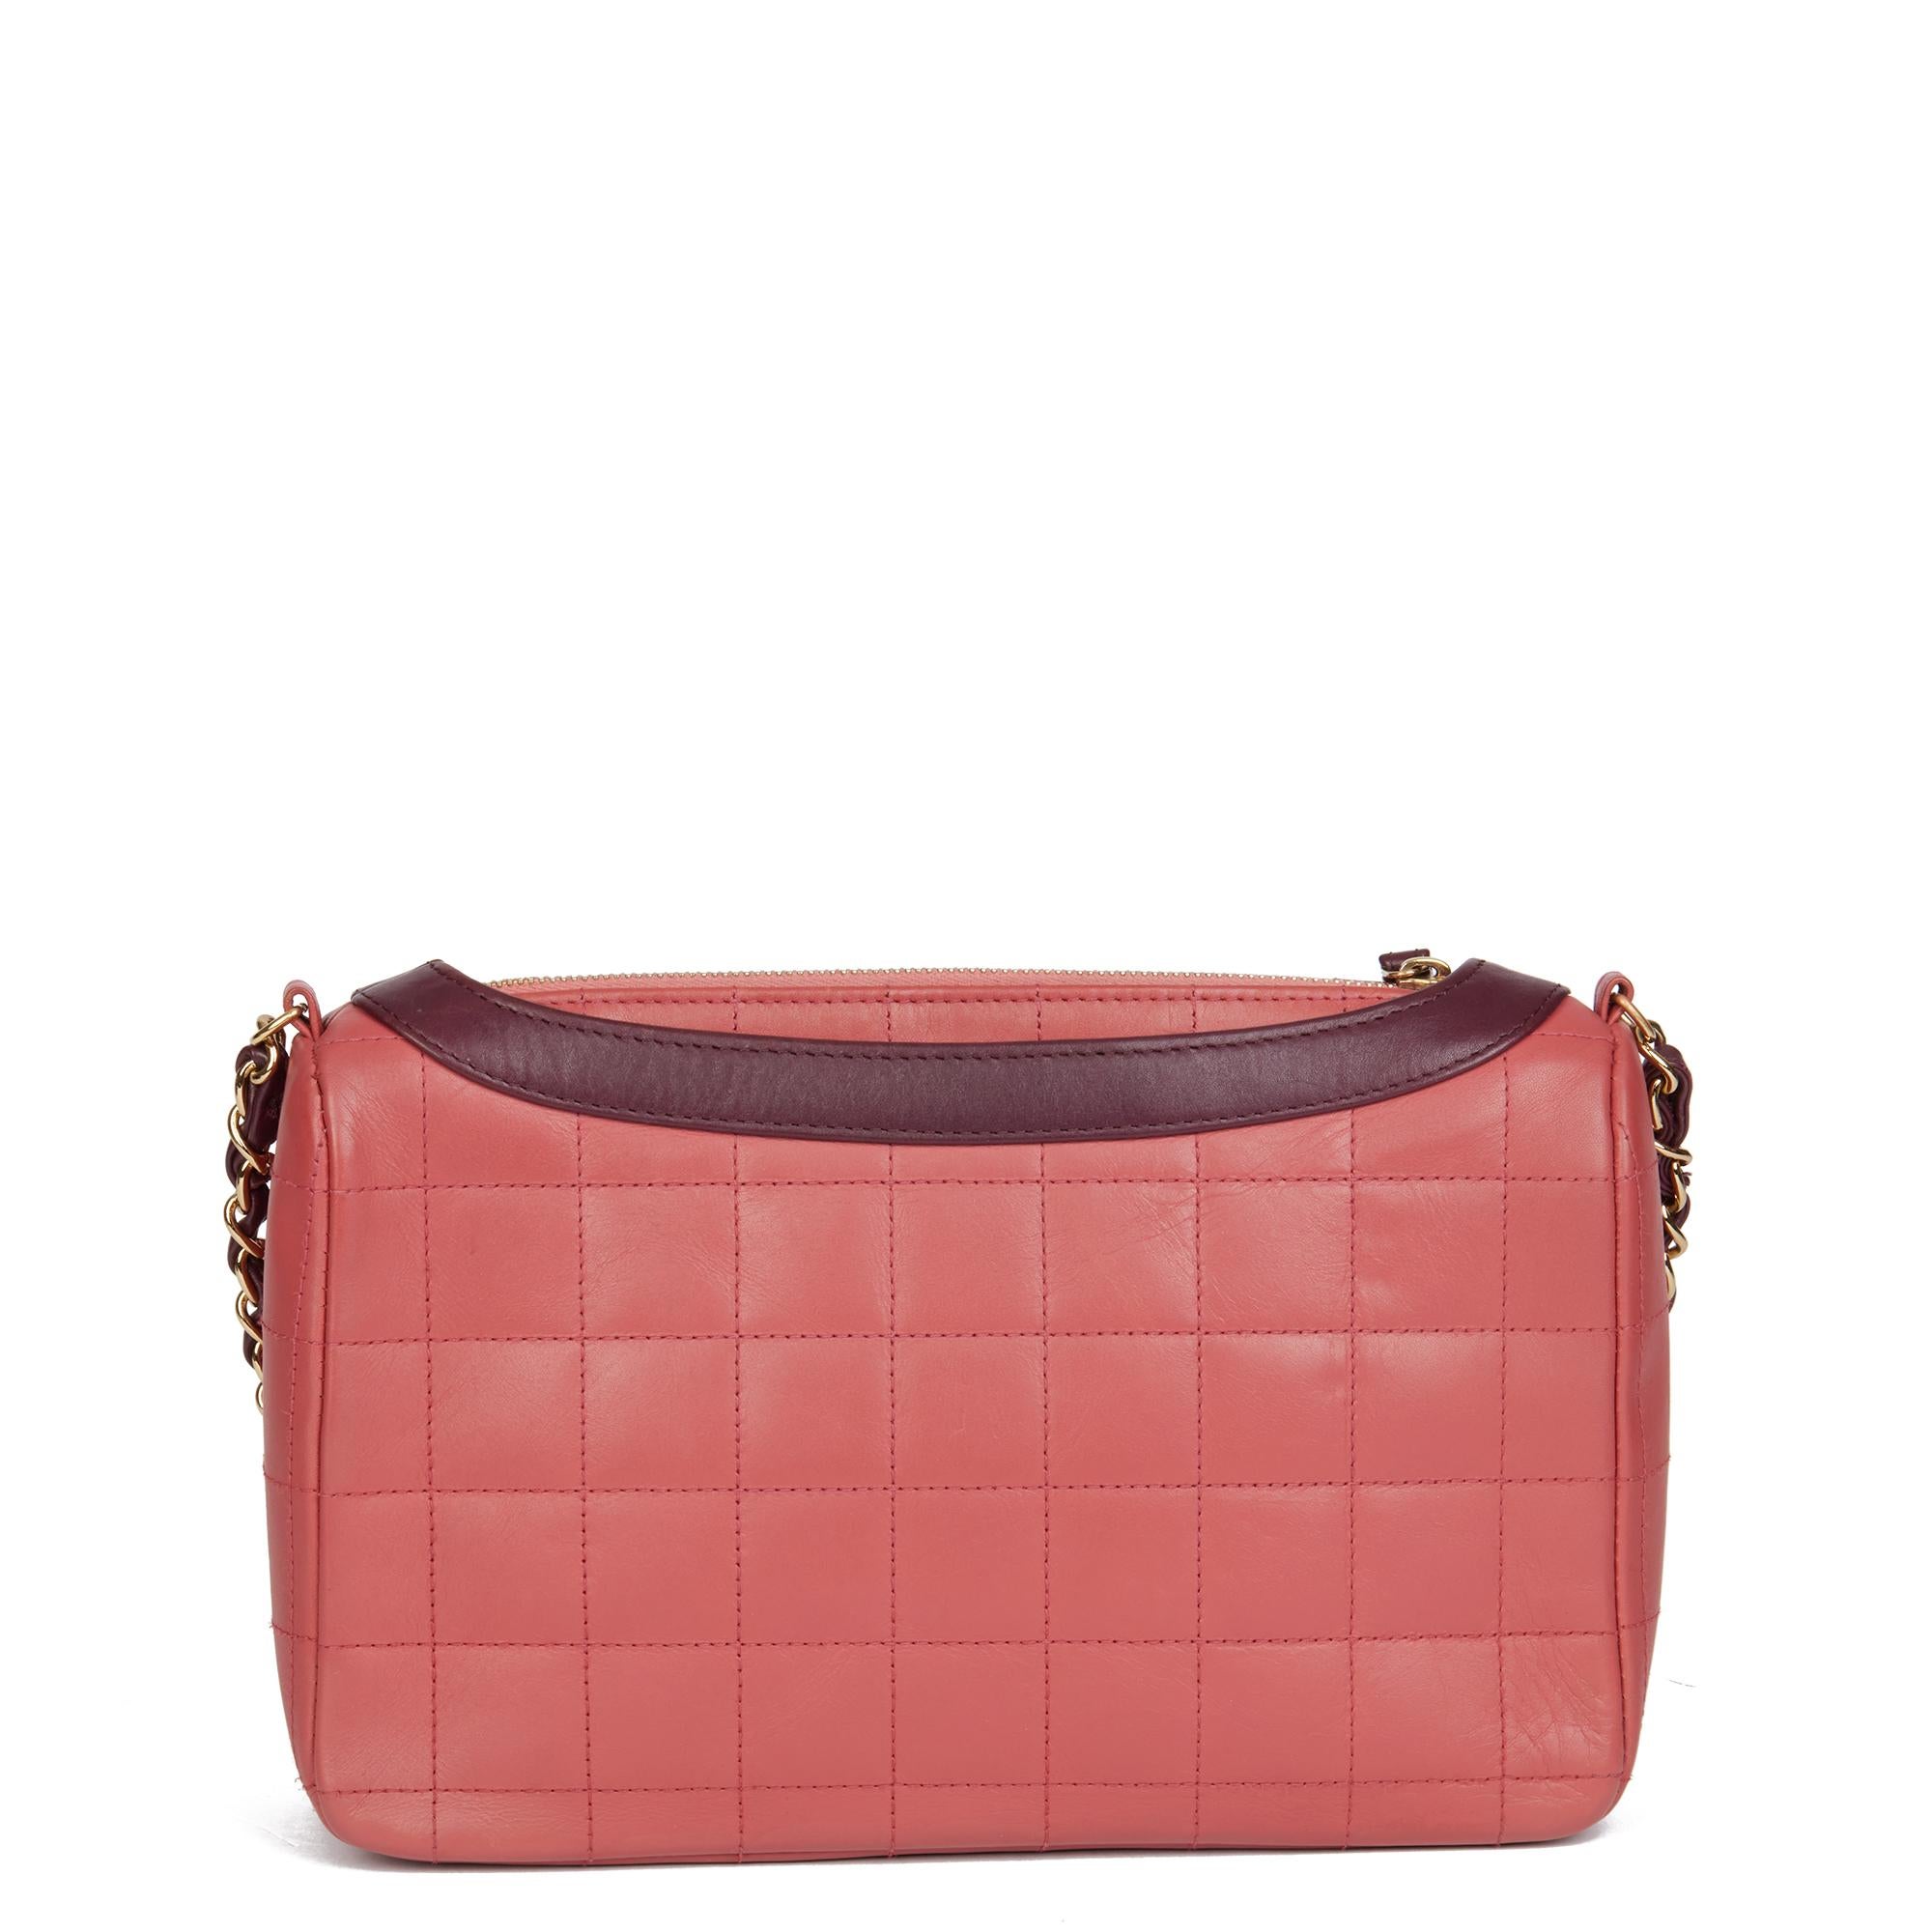 Pink Chanel PINK QUILTED LAMBSKIN LEATHER VINTAGE JACKET BAG